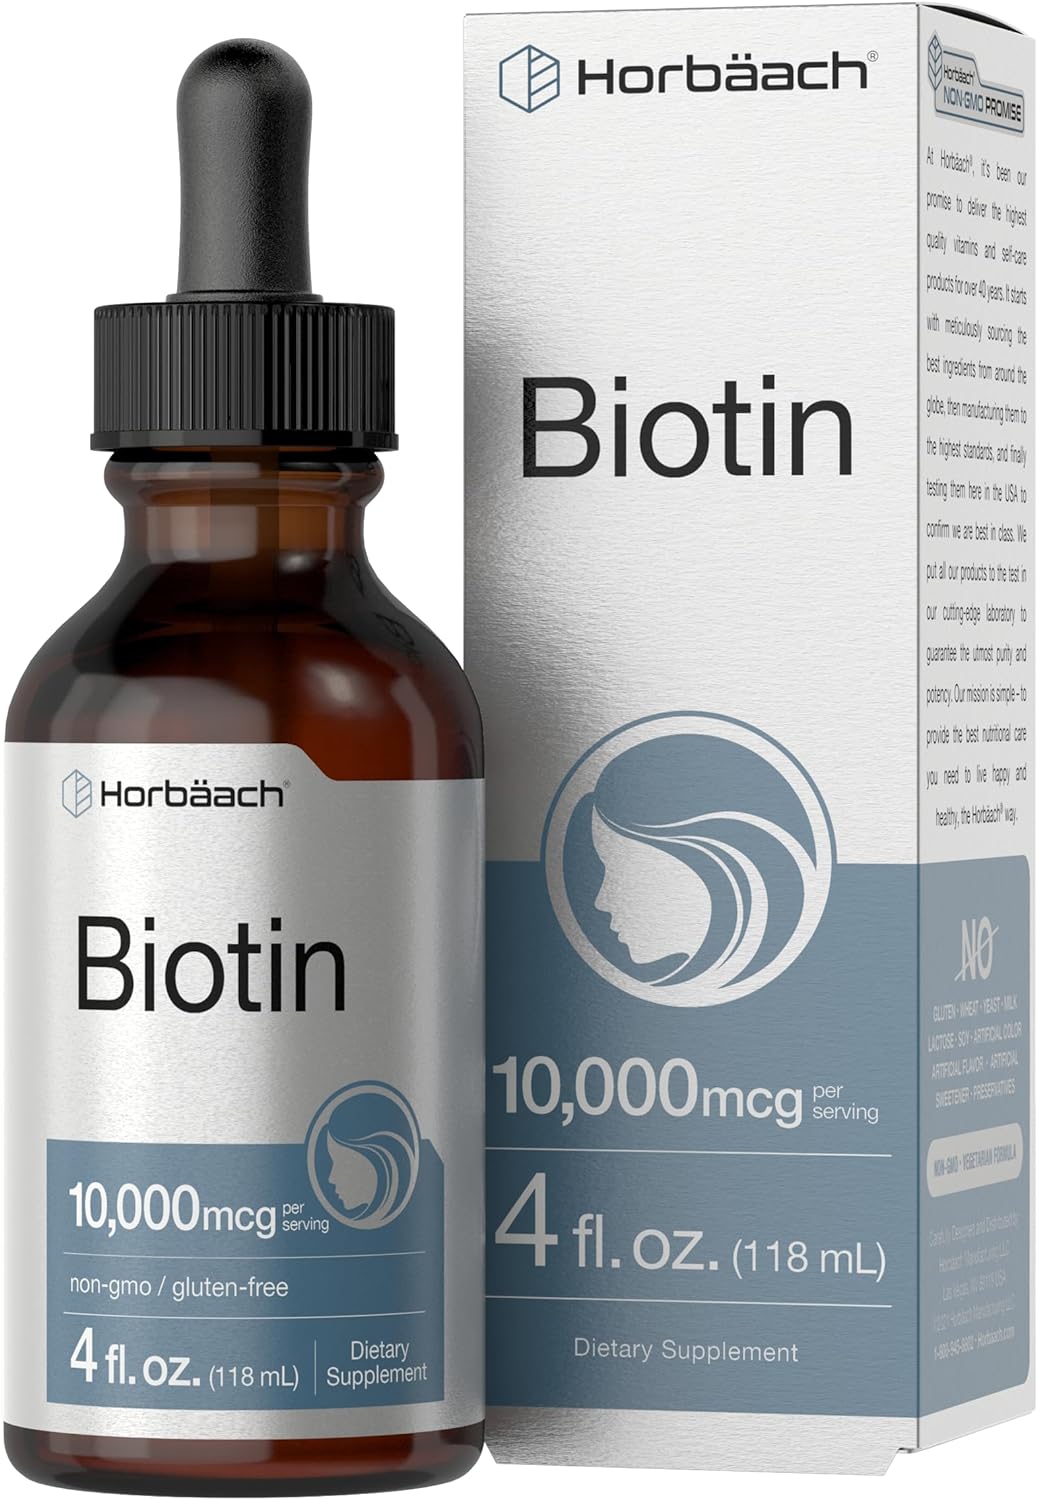 Horbaach Biotin Liquid Drops 10000mcg | 4 fl oz | Vegetarian, Non-GMO & Gluten Free Supplement